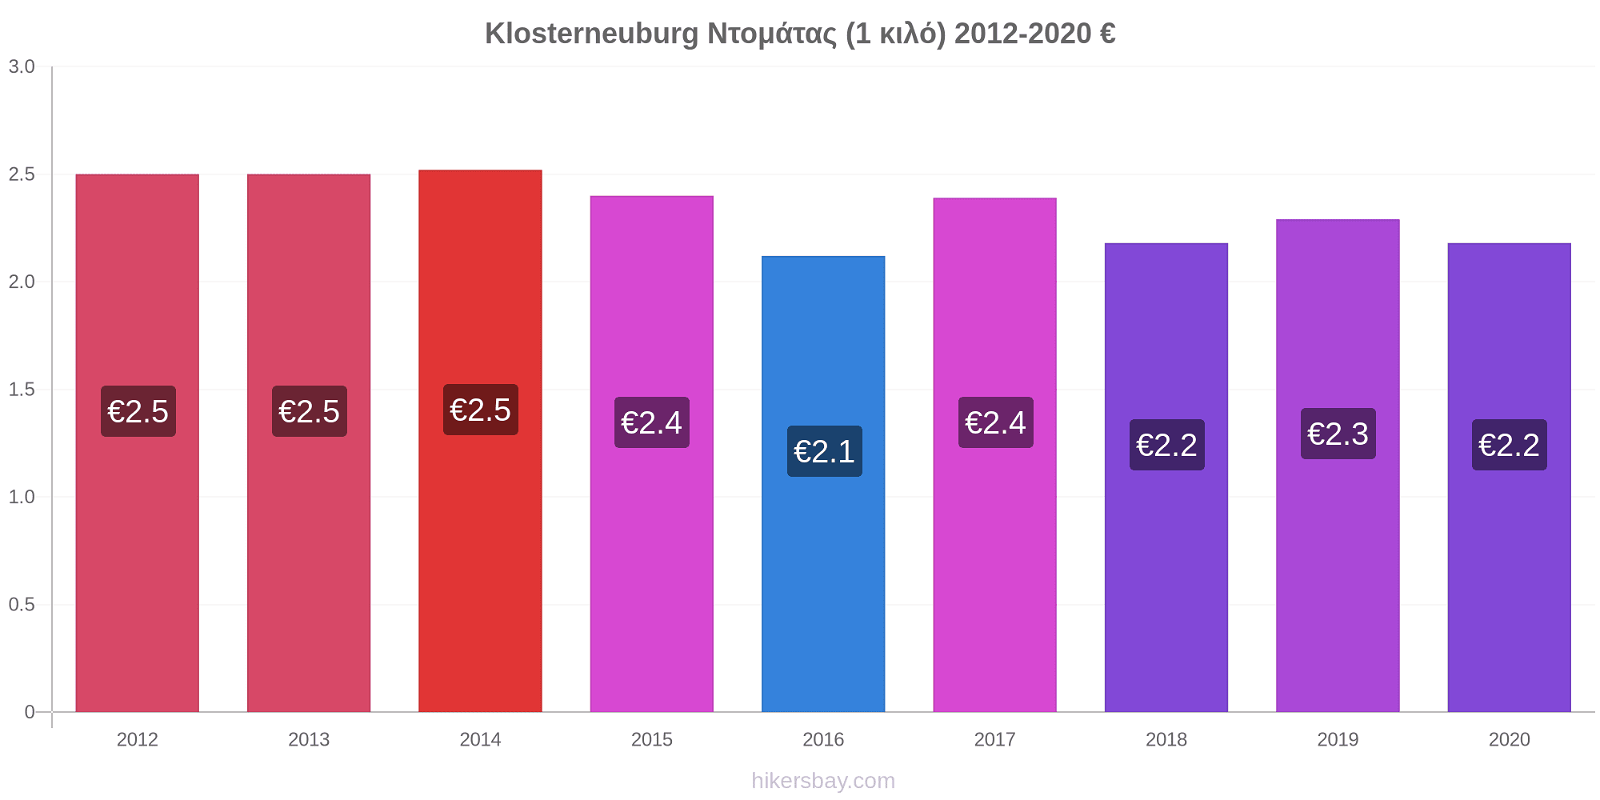 Klosterneuburg αλλαγές τιμών Ντομάτας (1 κιλό) hikersbay.com